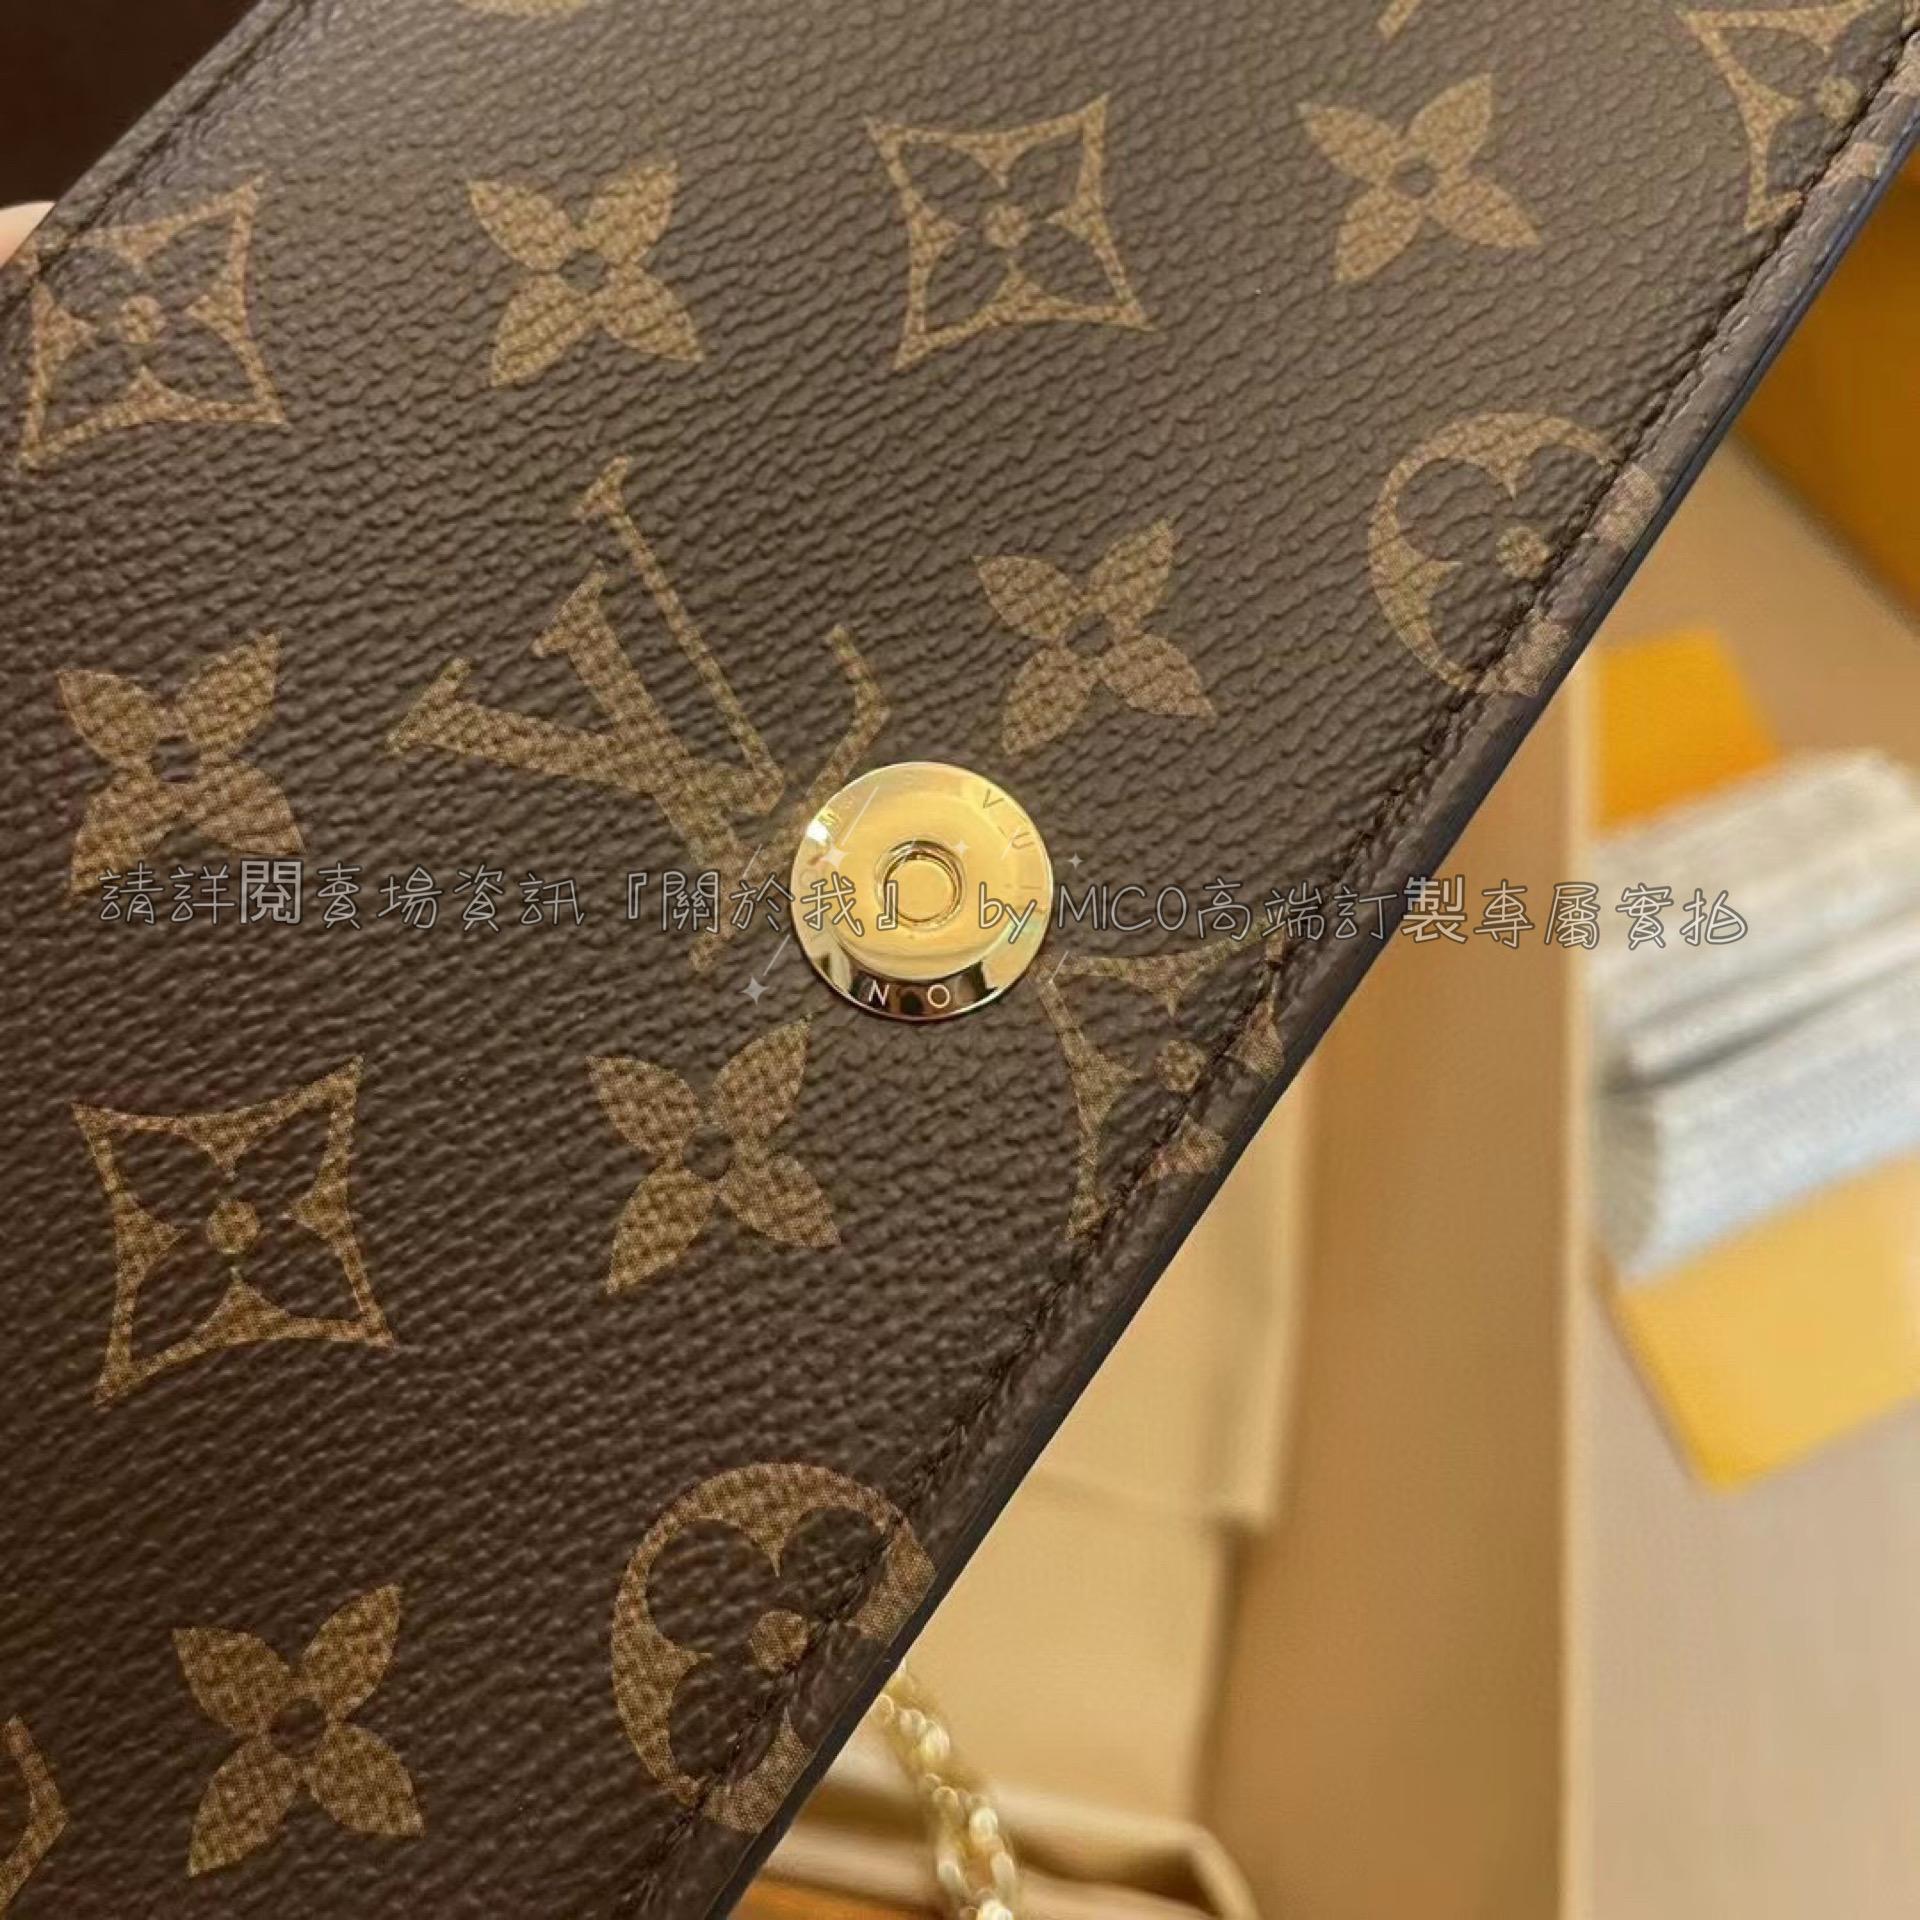 Louis Vuitton MONOGRAM Louis Vuitton Wallet On Chain Lily M82509 (M82509)